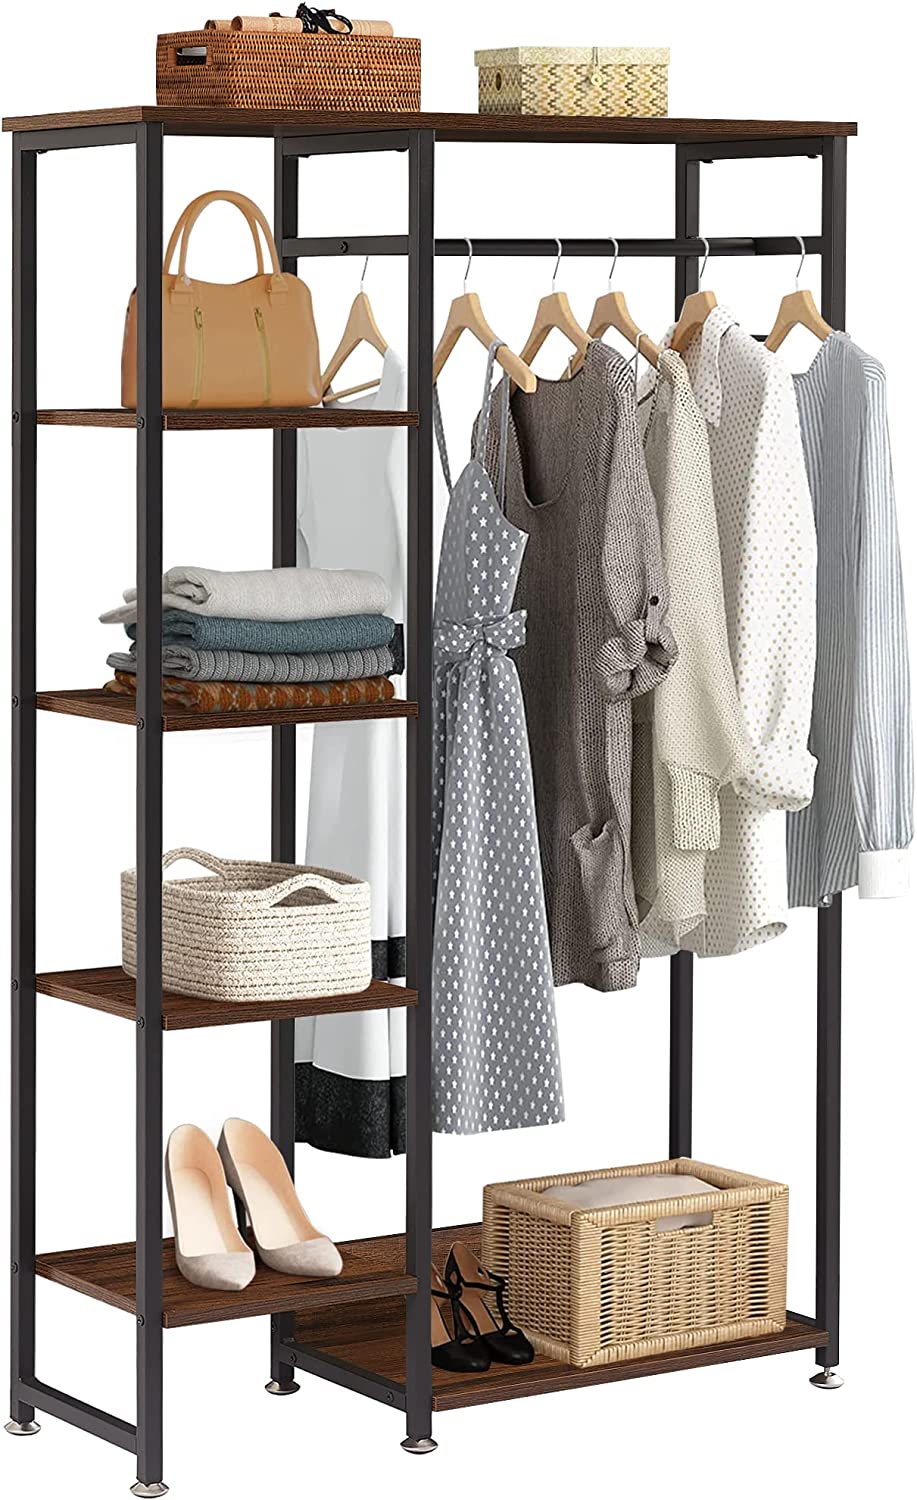 VECELO Metal Hanging Storage Organizer/Rack Wardrobe with Shelves & Open Storage Space & Hanging Rod